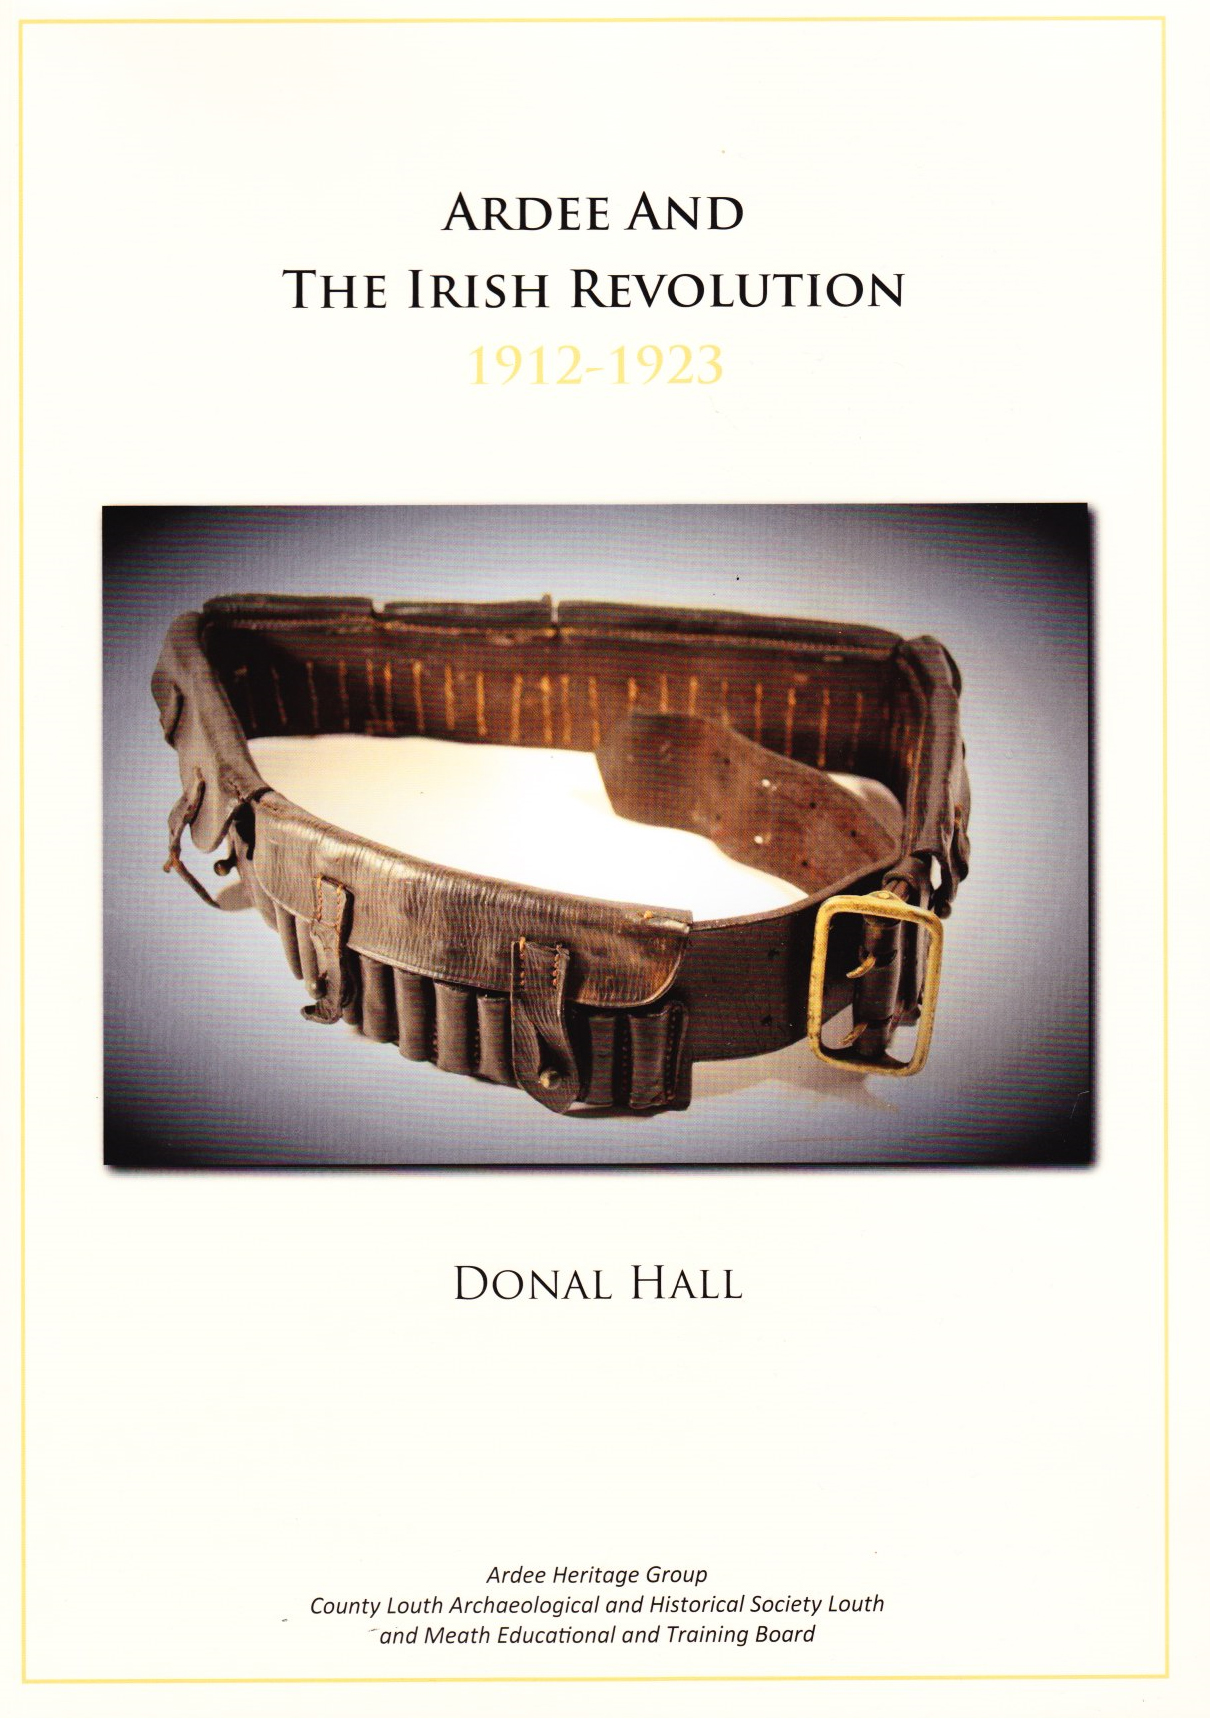 Launch of ‘Ardee and the Irish Revolution 1912-1923’